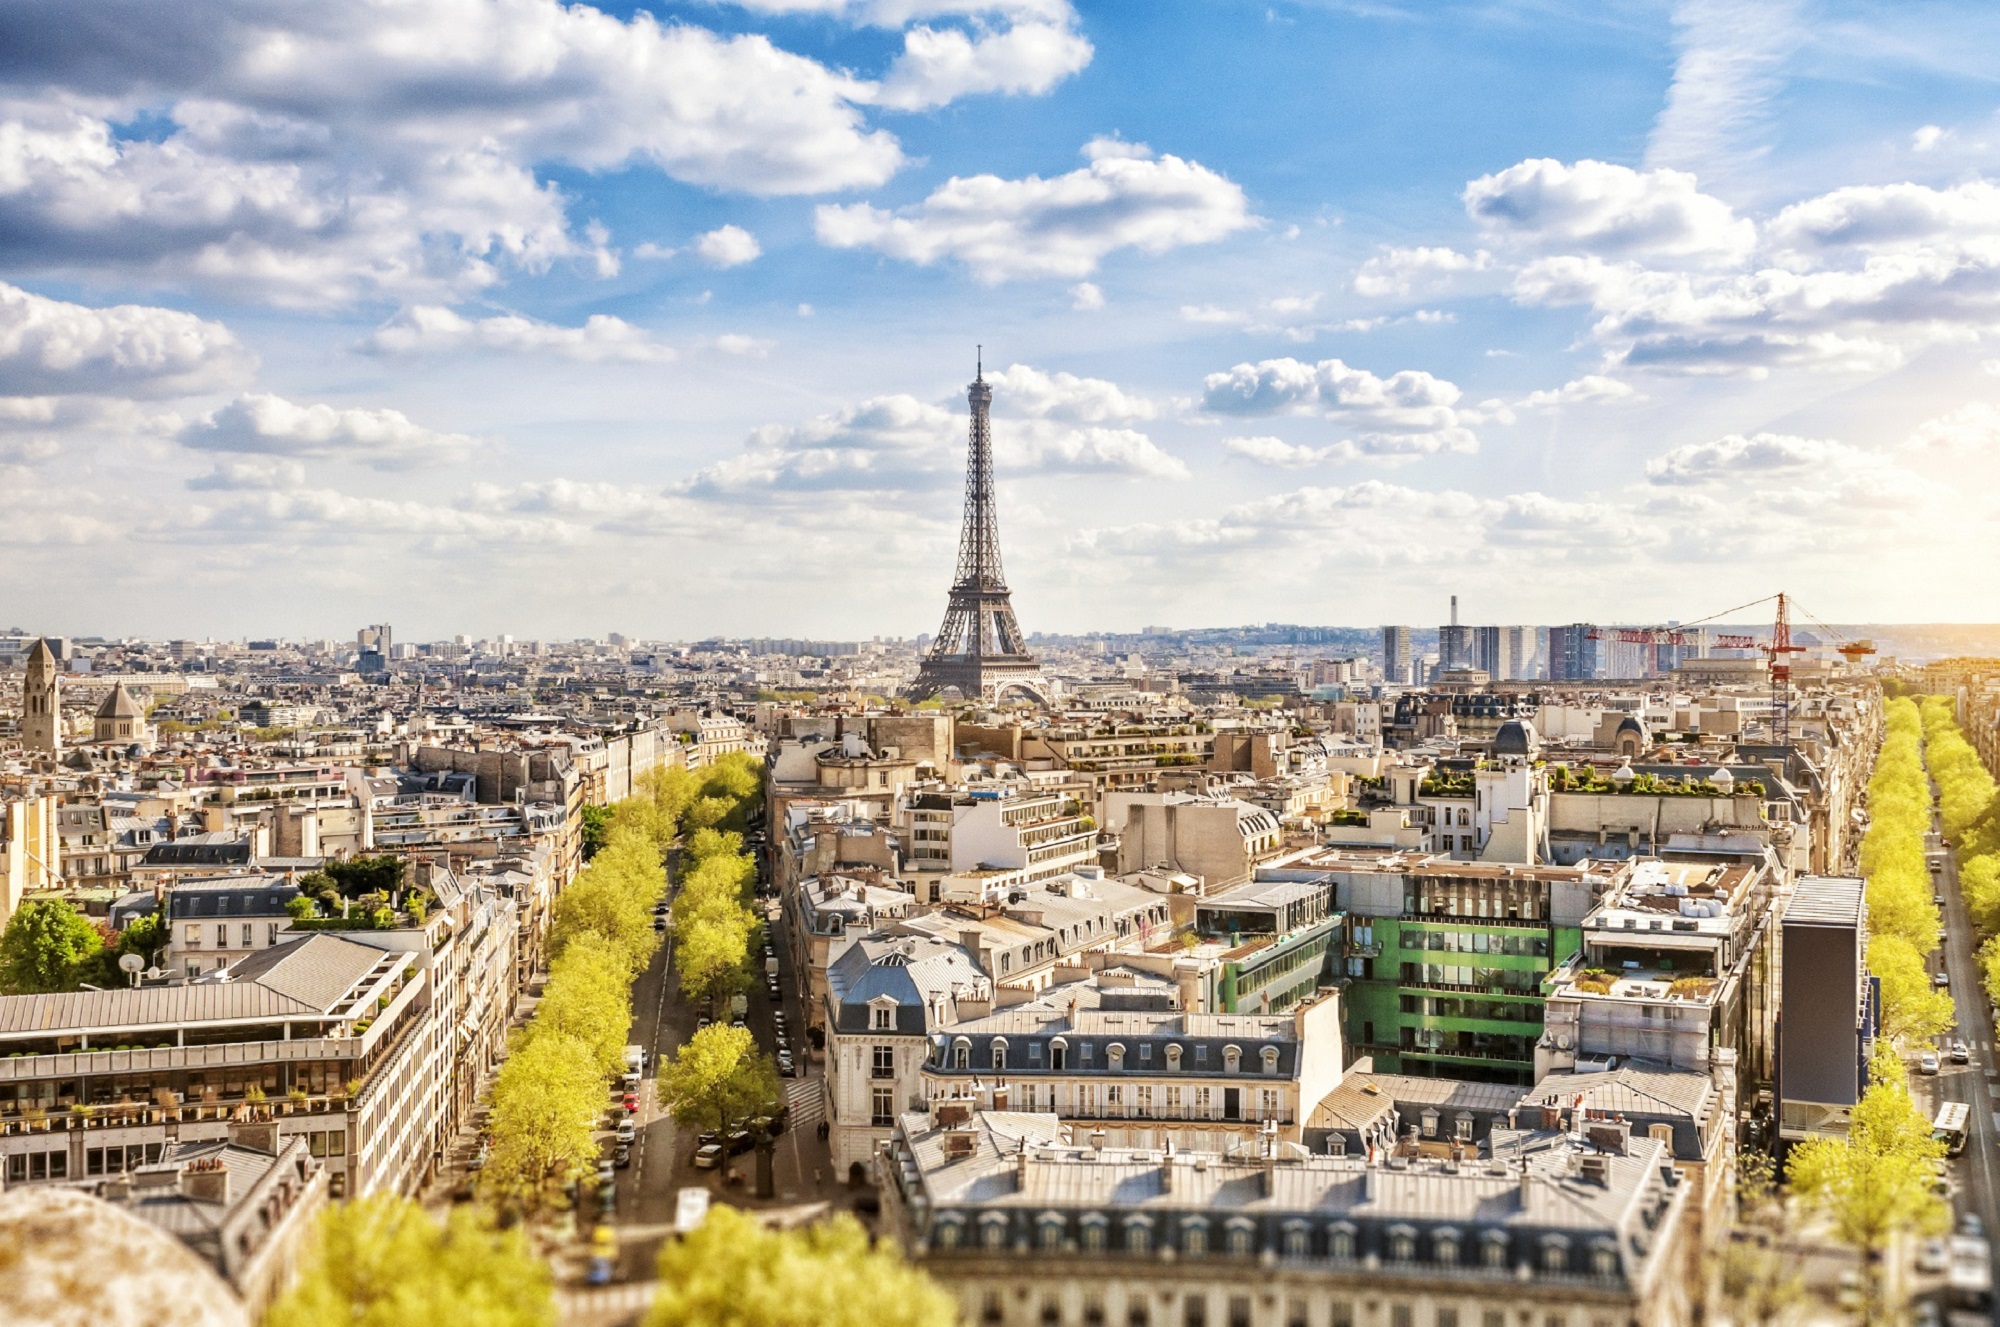 Города парижа. Париж панорама Эйфелева башня. Панорама эльфовой башни. Париж Эйфелева башня вид с города. Панорамный вид Парижа.